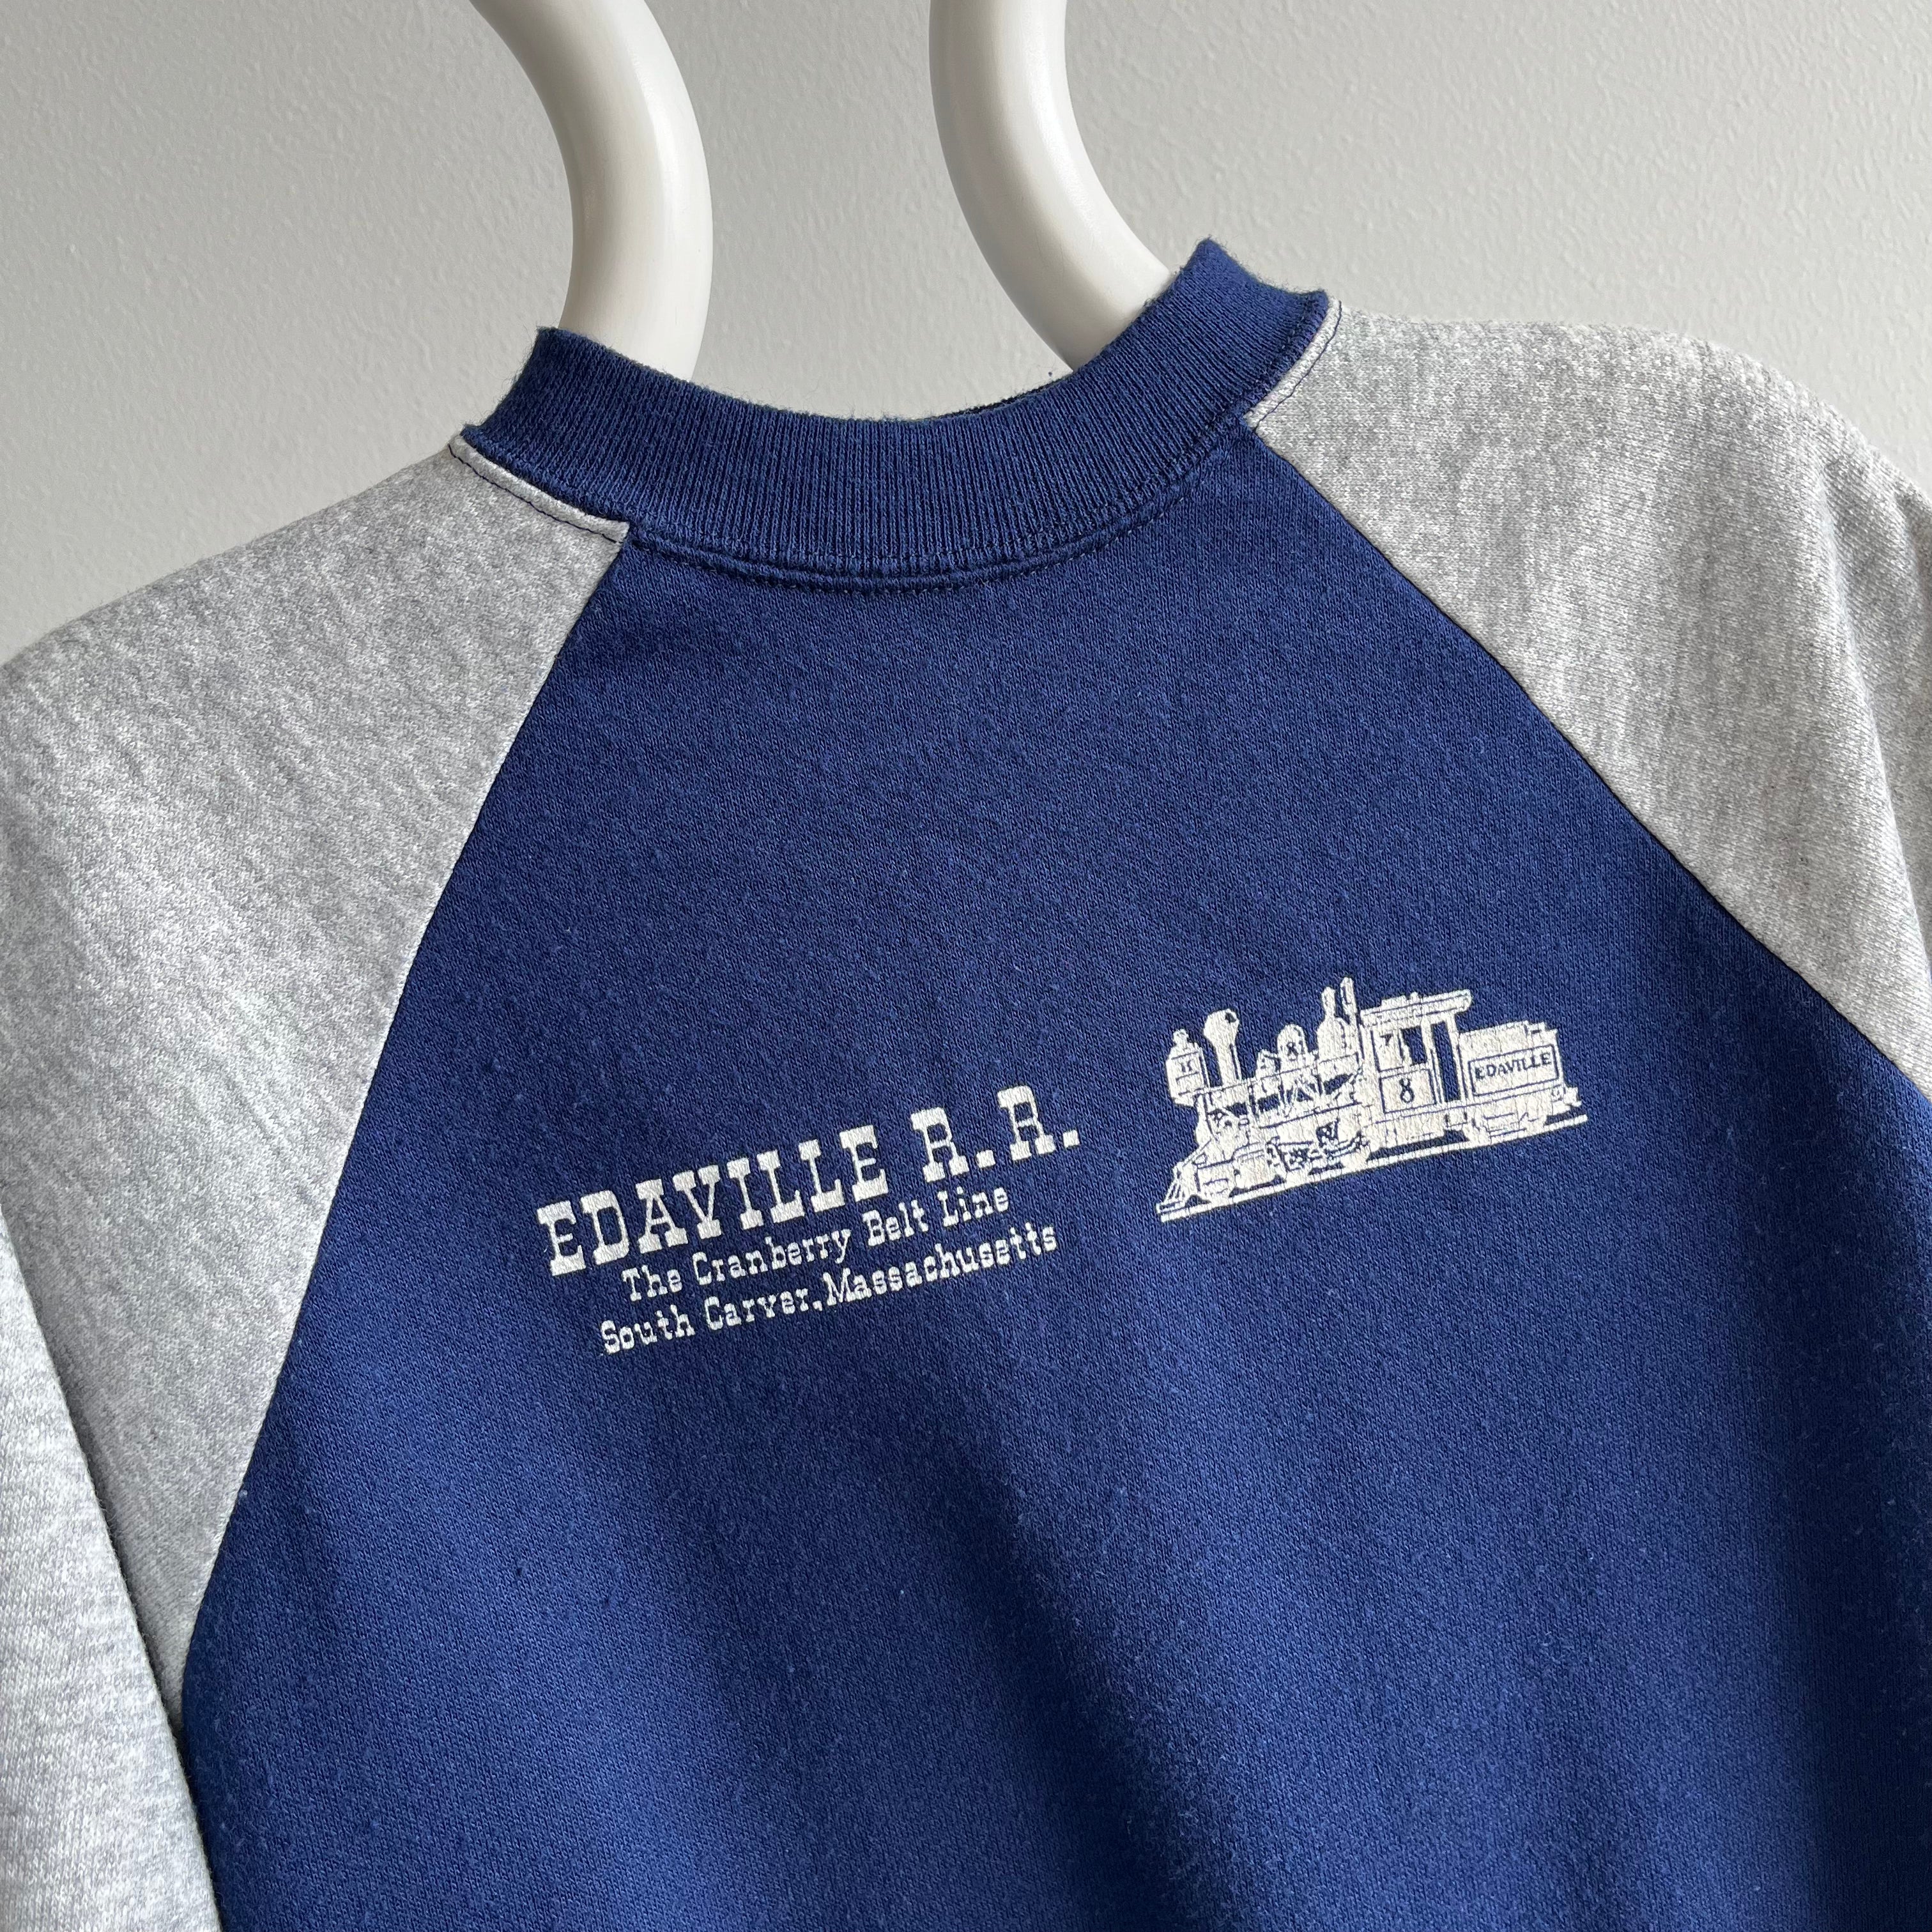 1970/80s Edaville Railroad - South Carver, Mass - Two Tone Sweatshirt